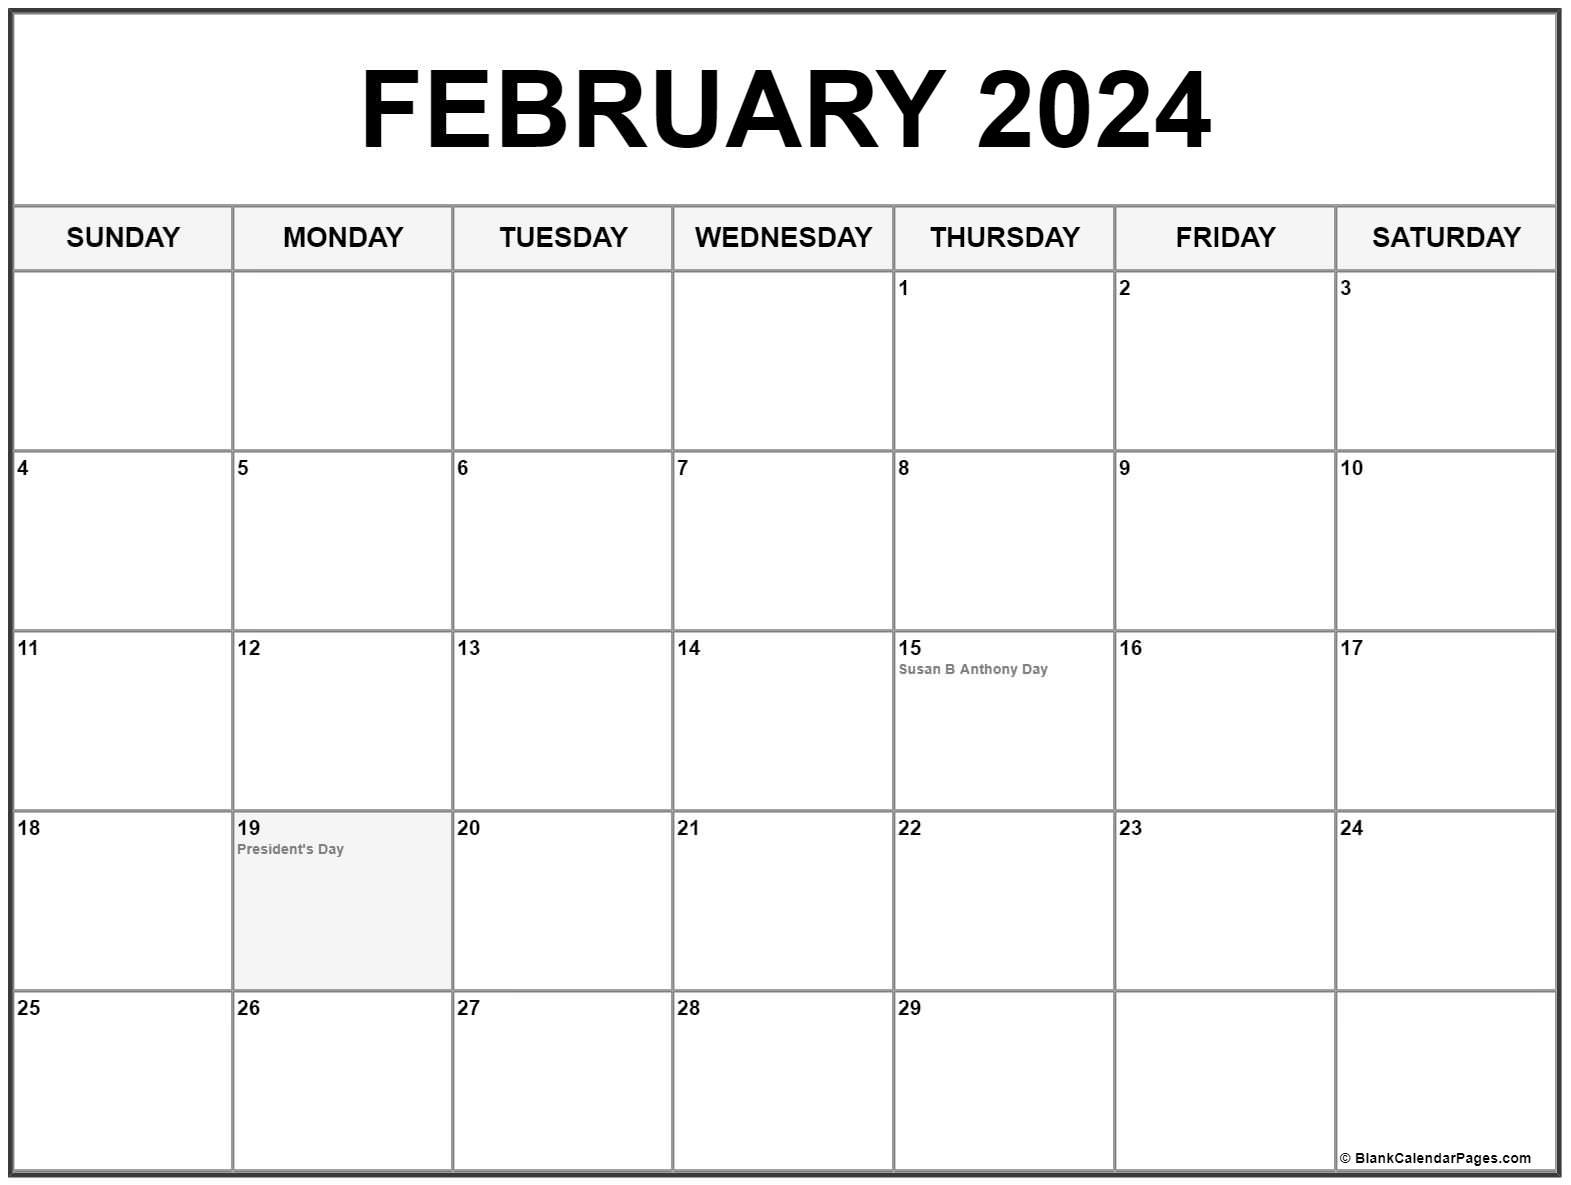 2023 calendar with federal holidays - crownflourmills.com